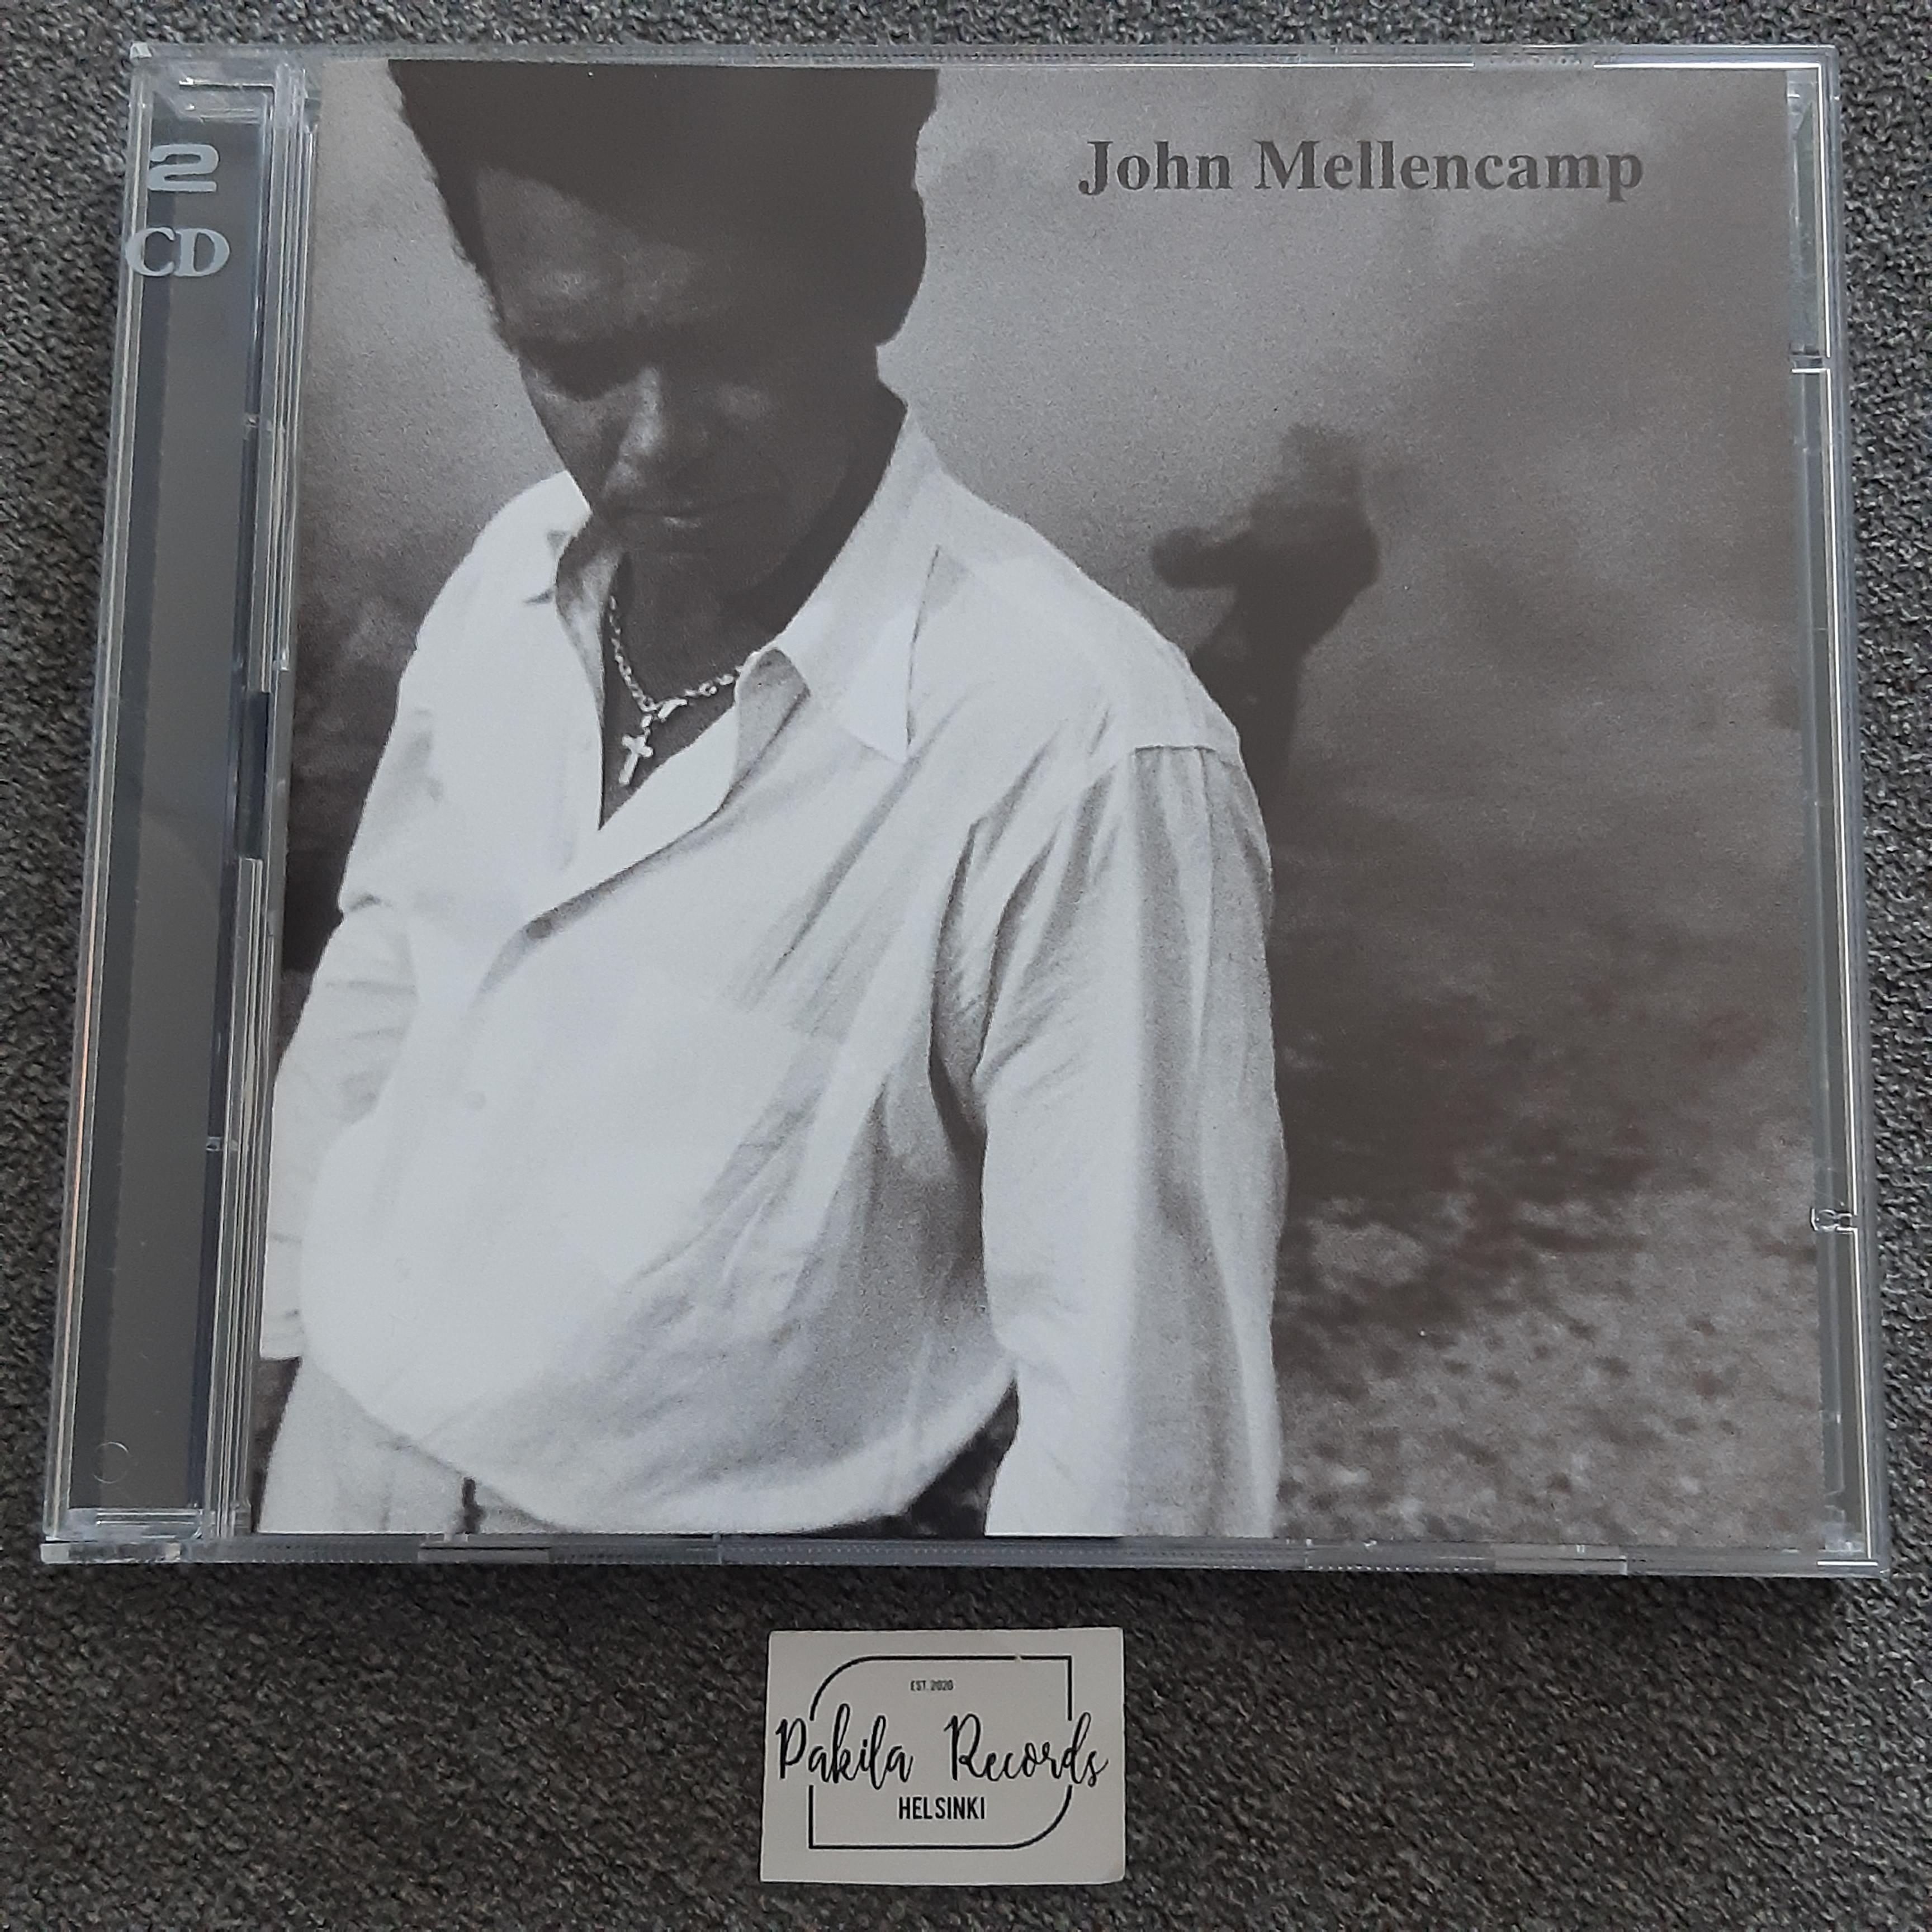 John Mellencamp - John Mellencamp - 2 CD (käytetty)